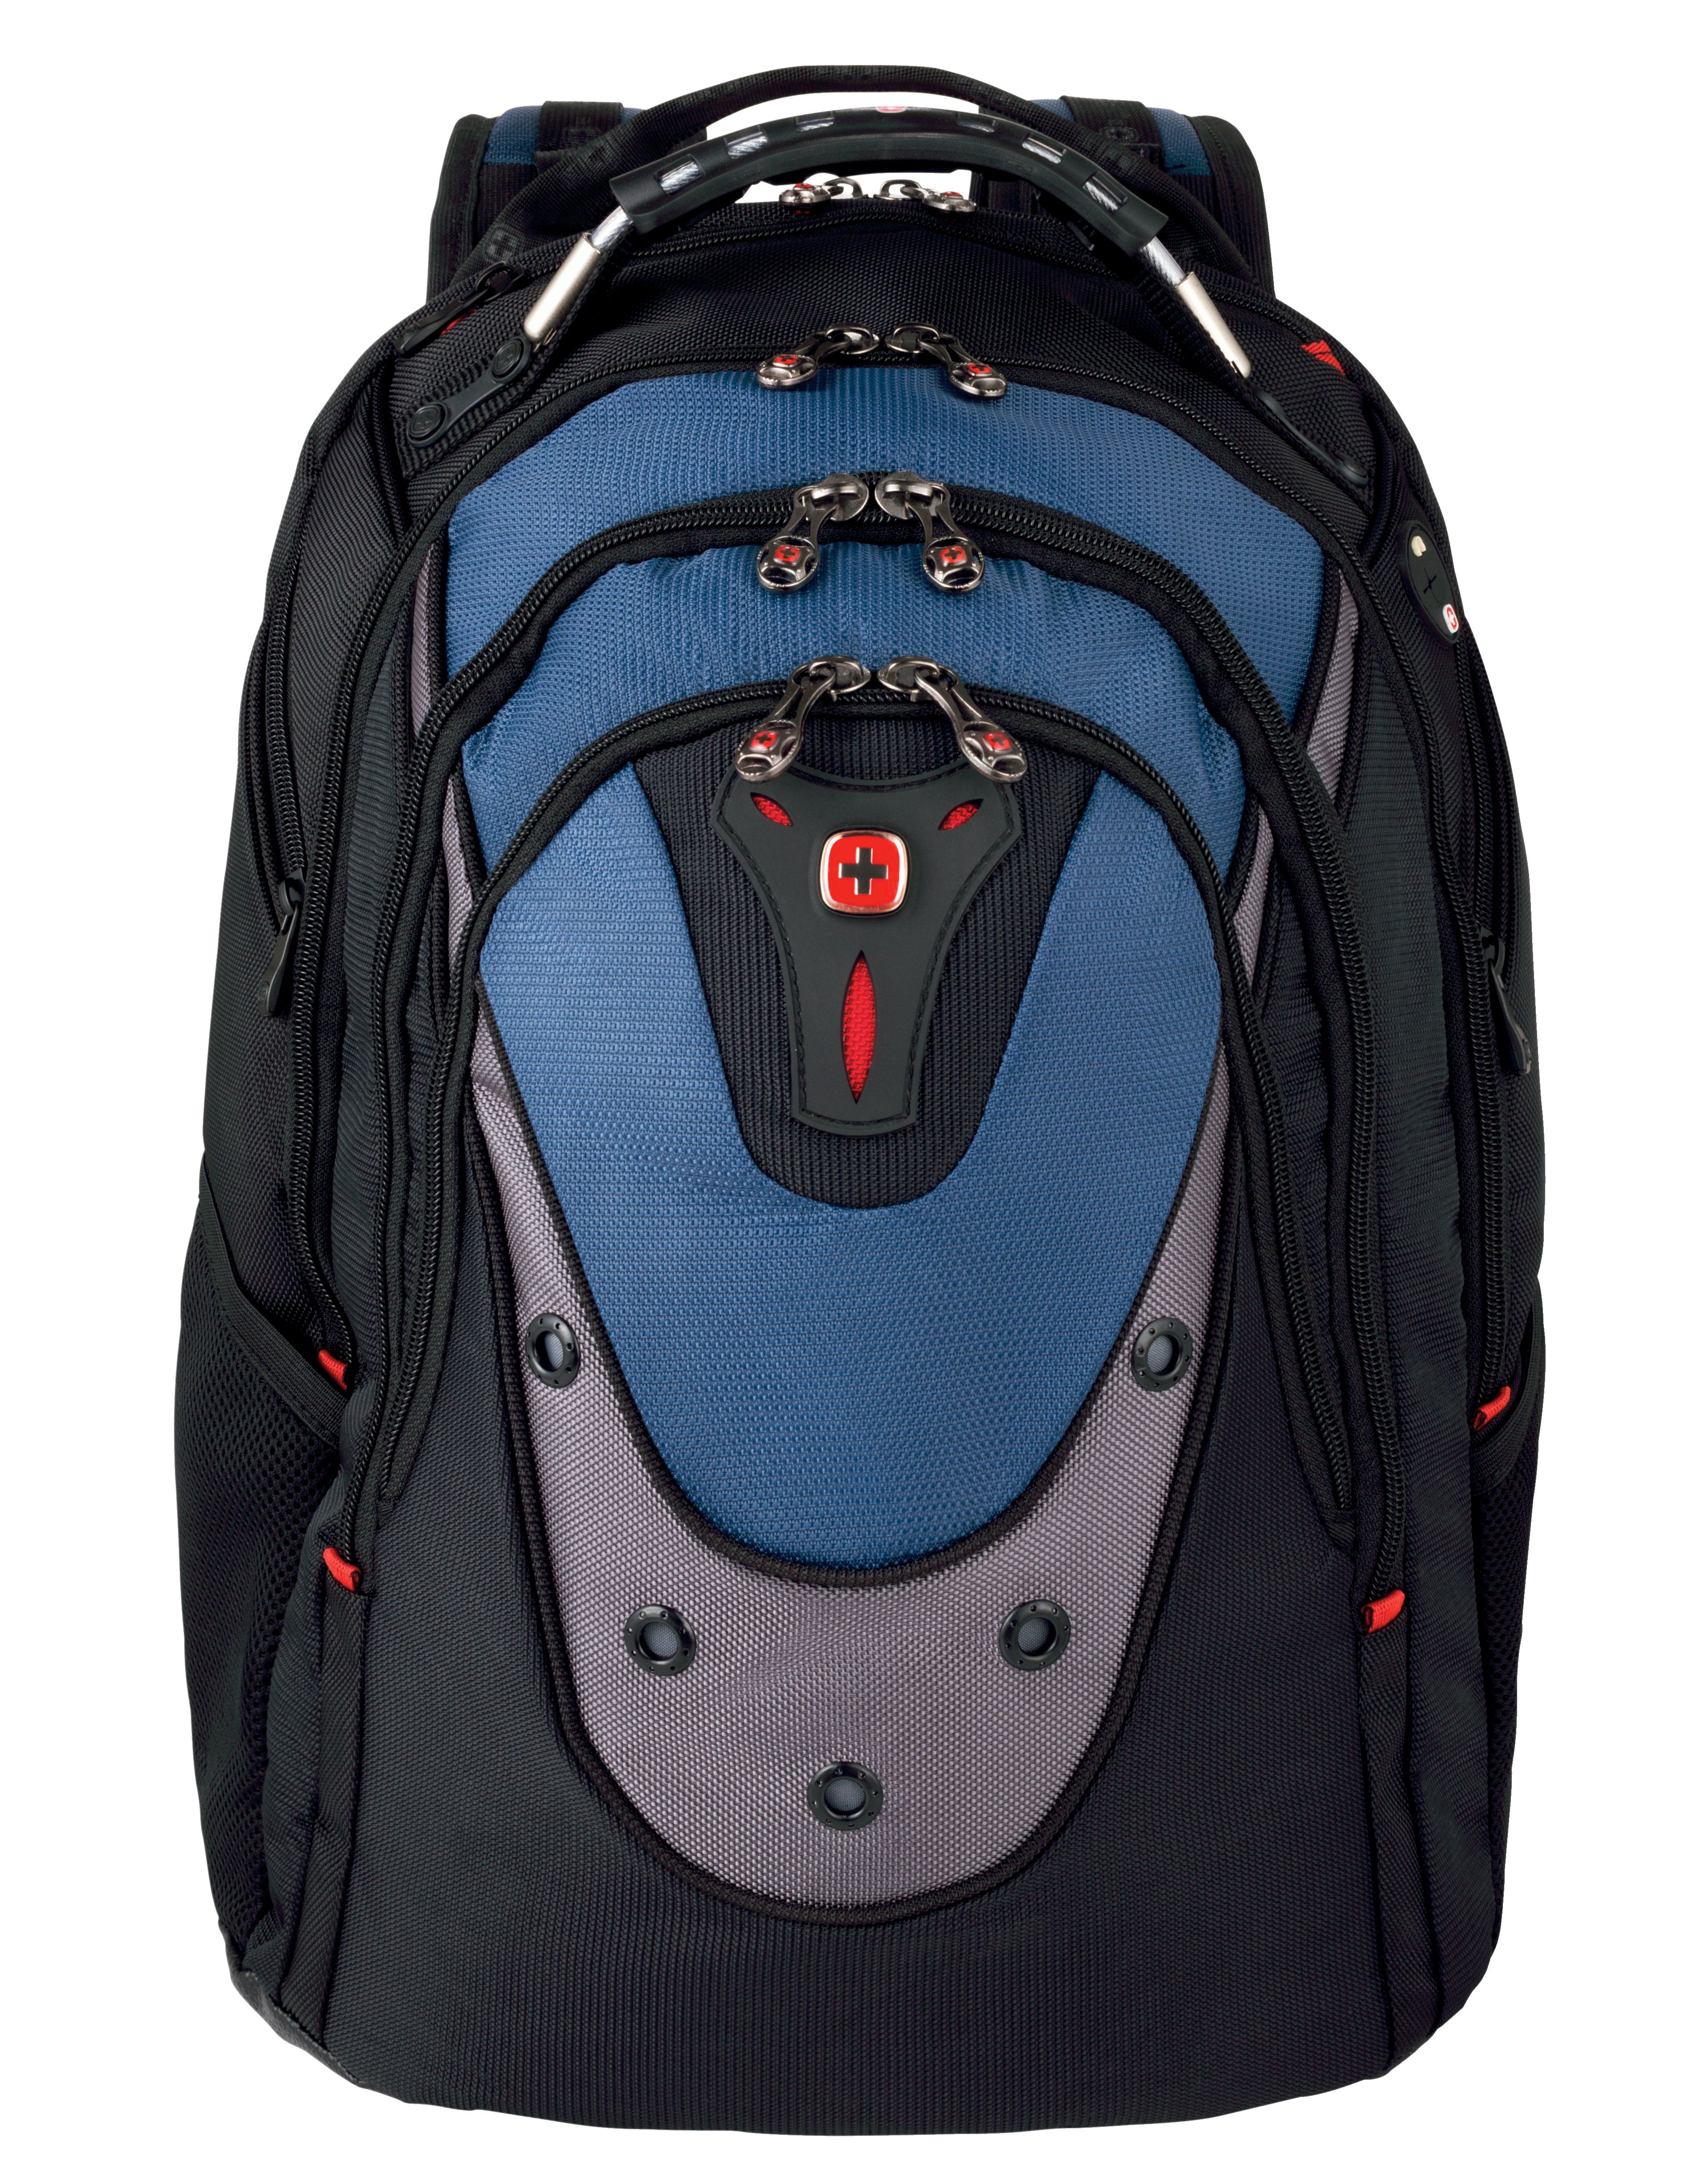 Wenger Swissgear Ibex 17 Backpack - Black/Blue